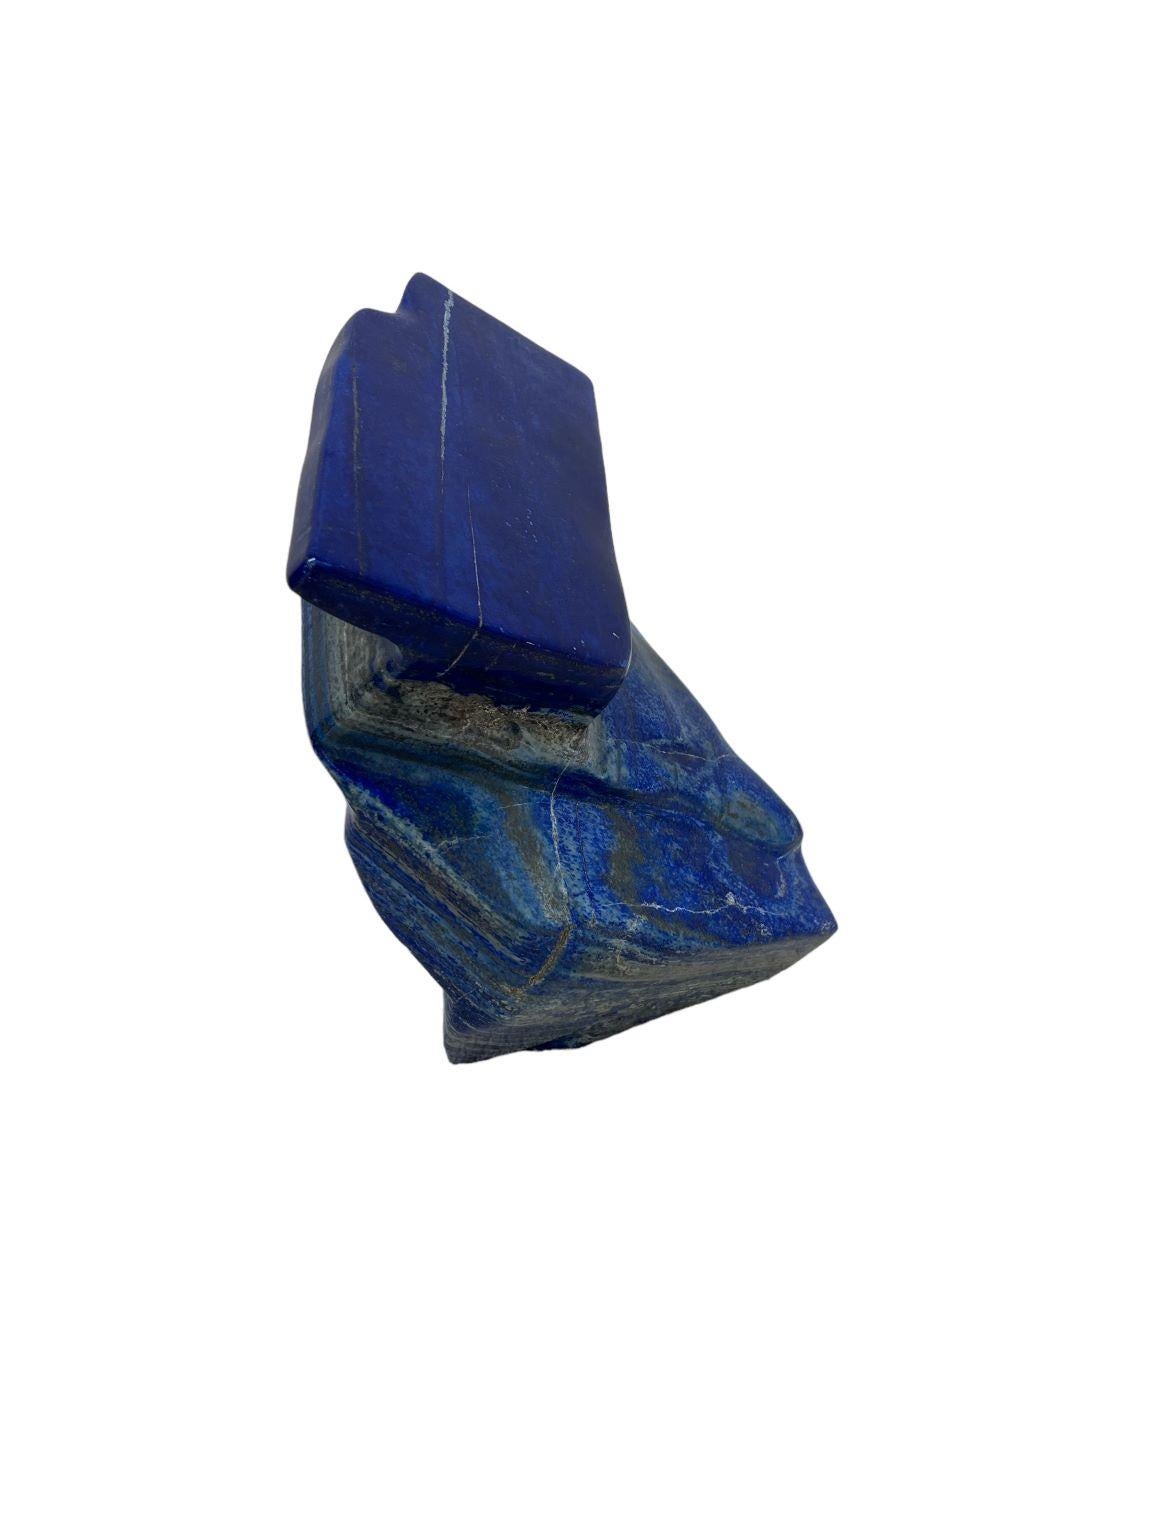 Lapis Lazuli Beautiful Freeform Lapis Sculpture Large Size and Shape  